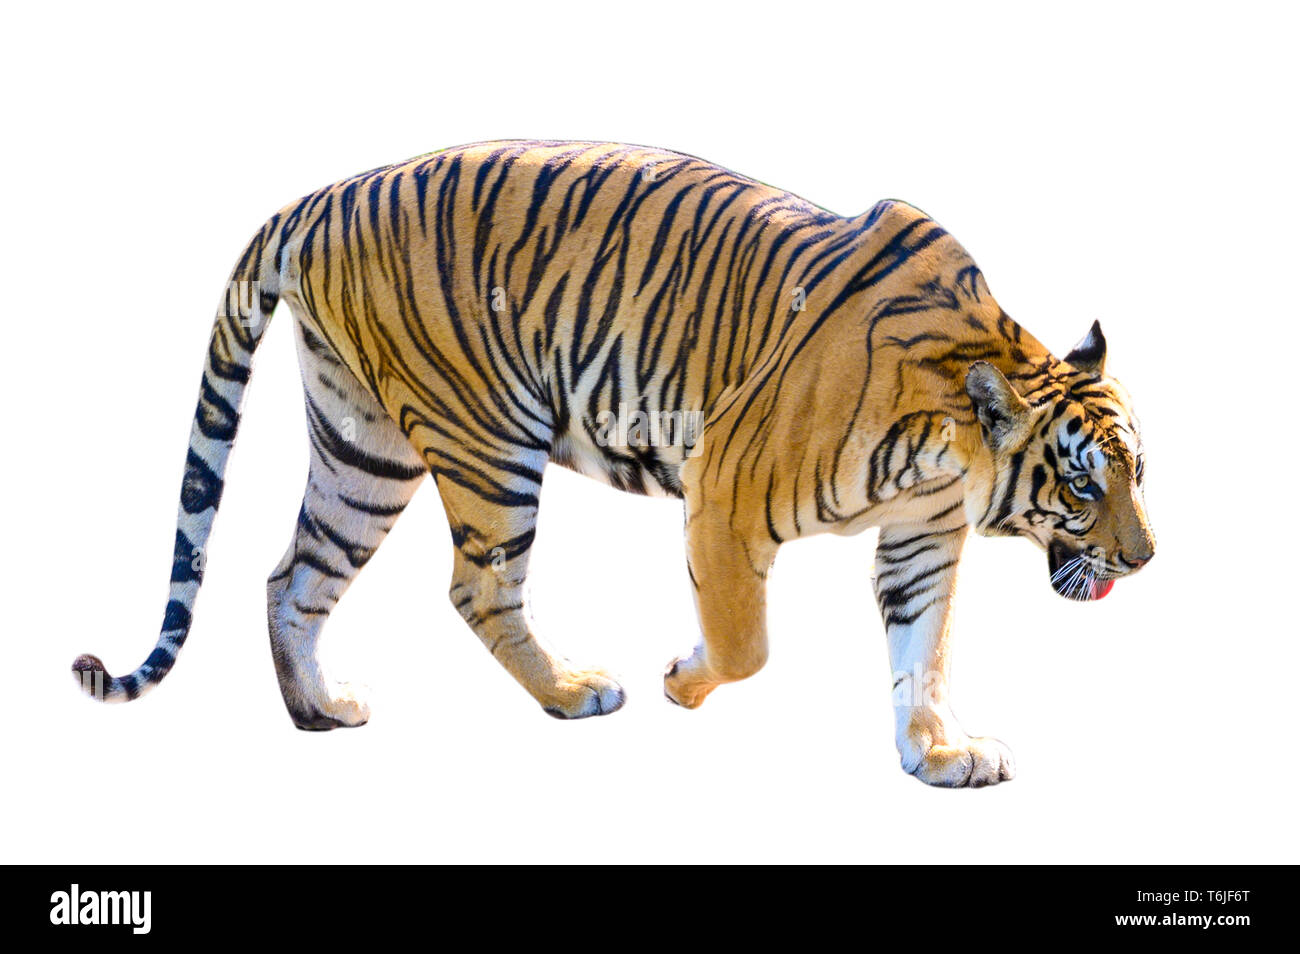 tiger White background Isolate full body Stock Photo - Alamy